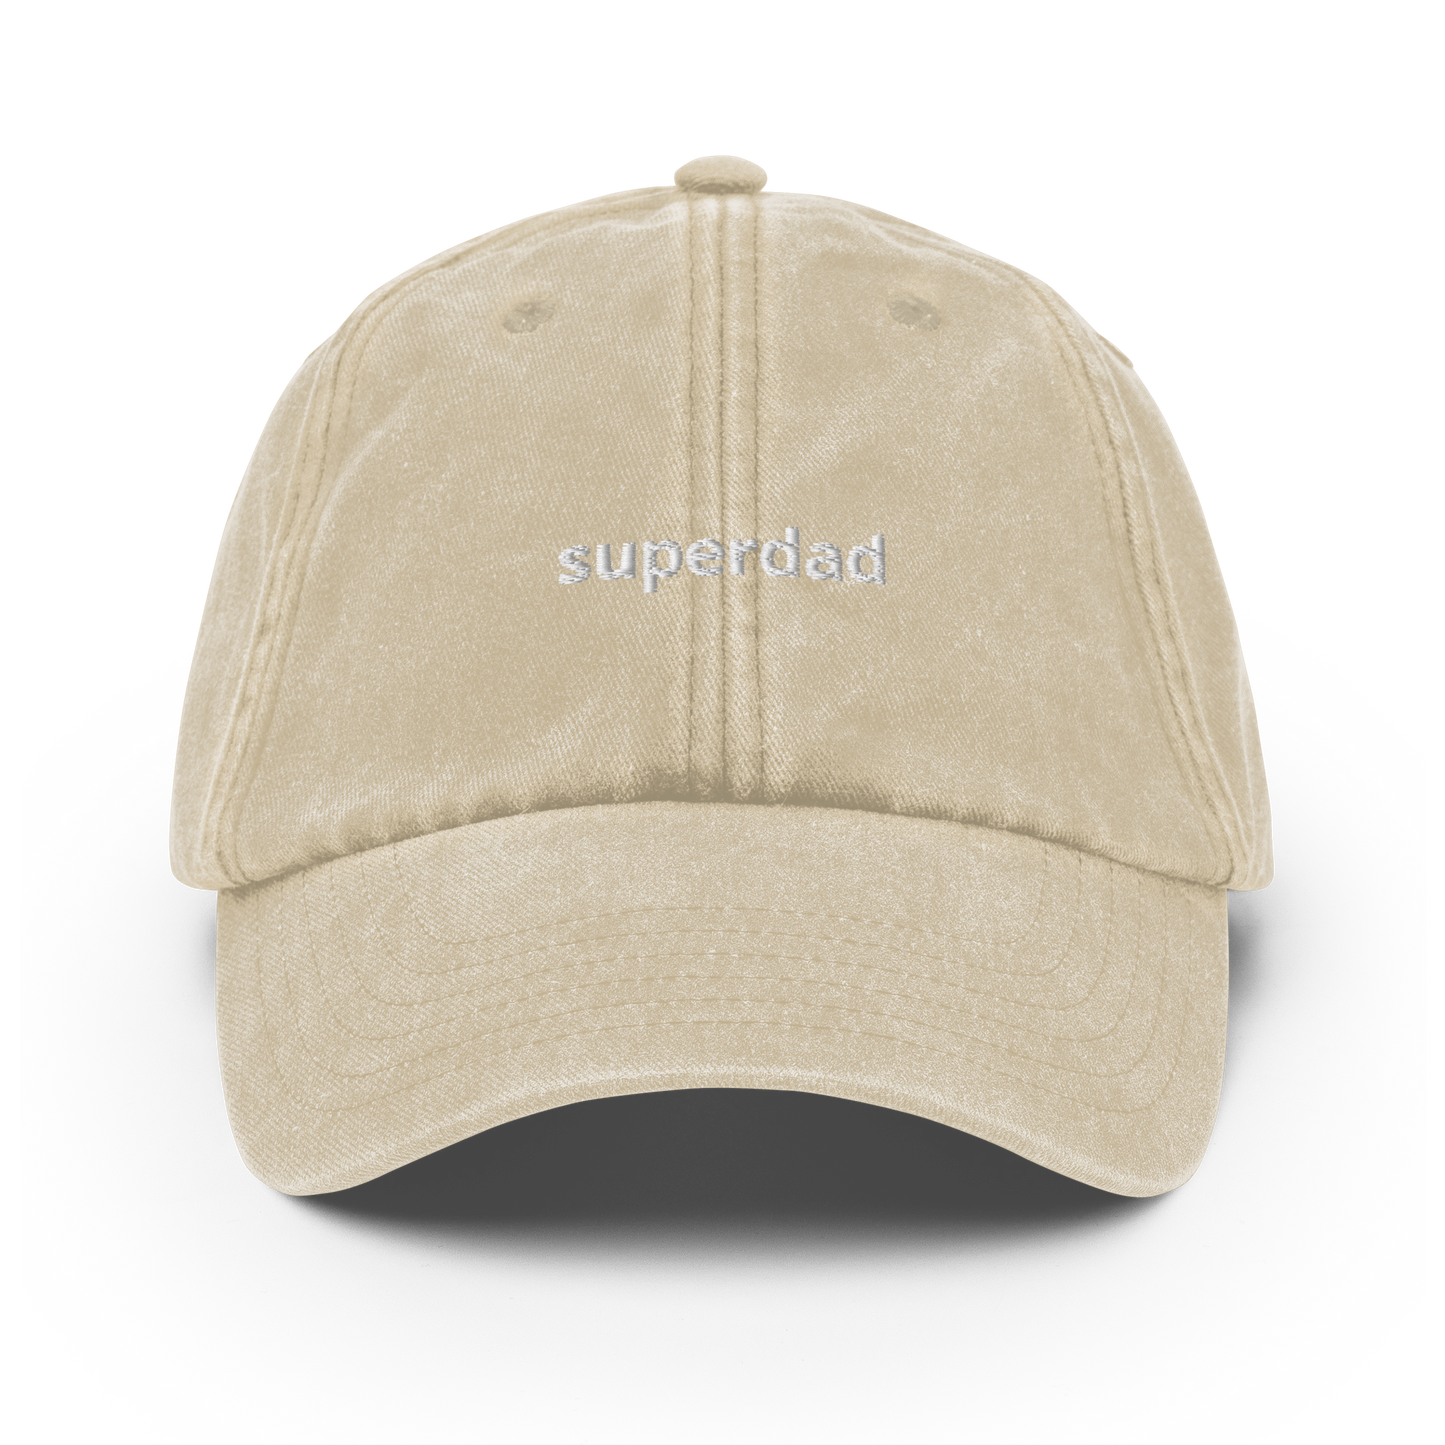 Superdad - Vintage Hat